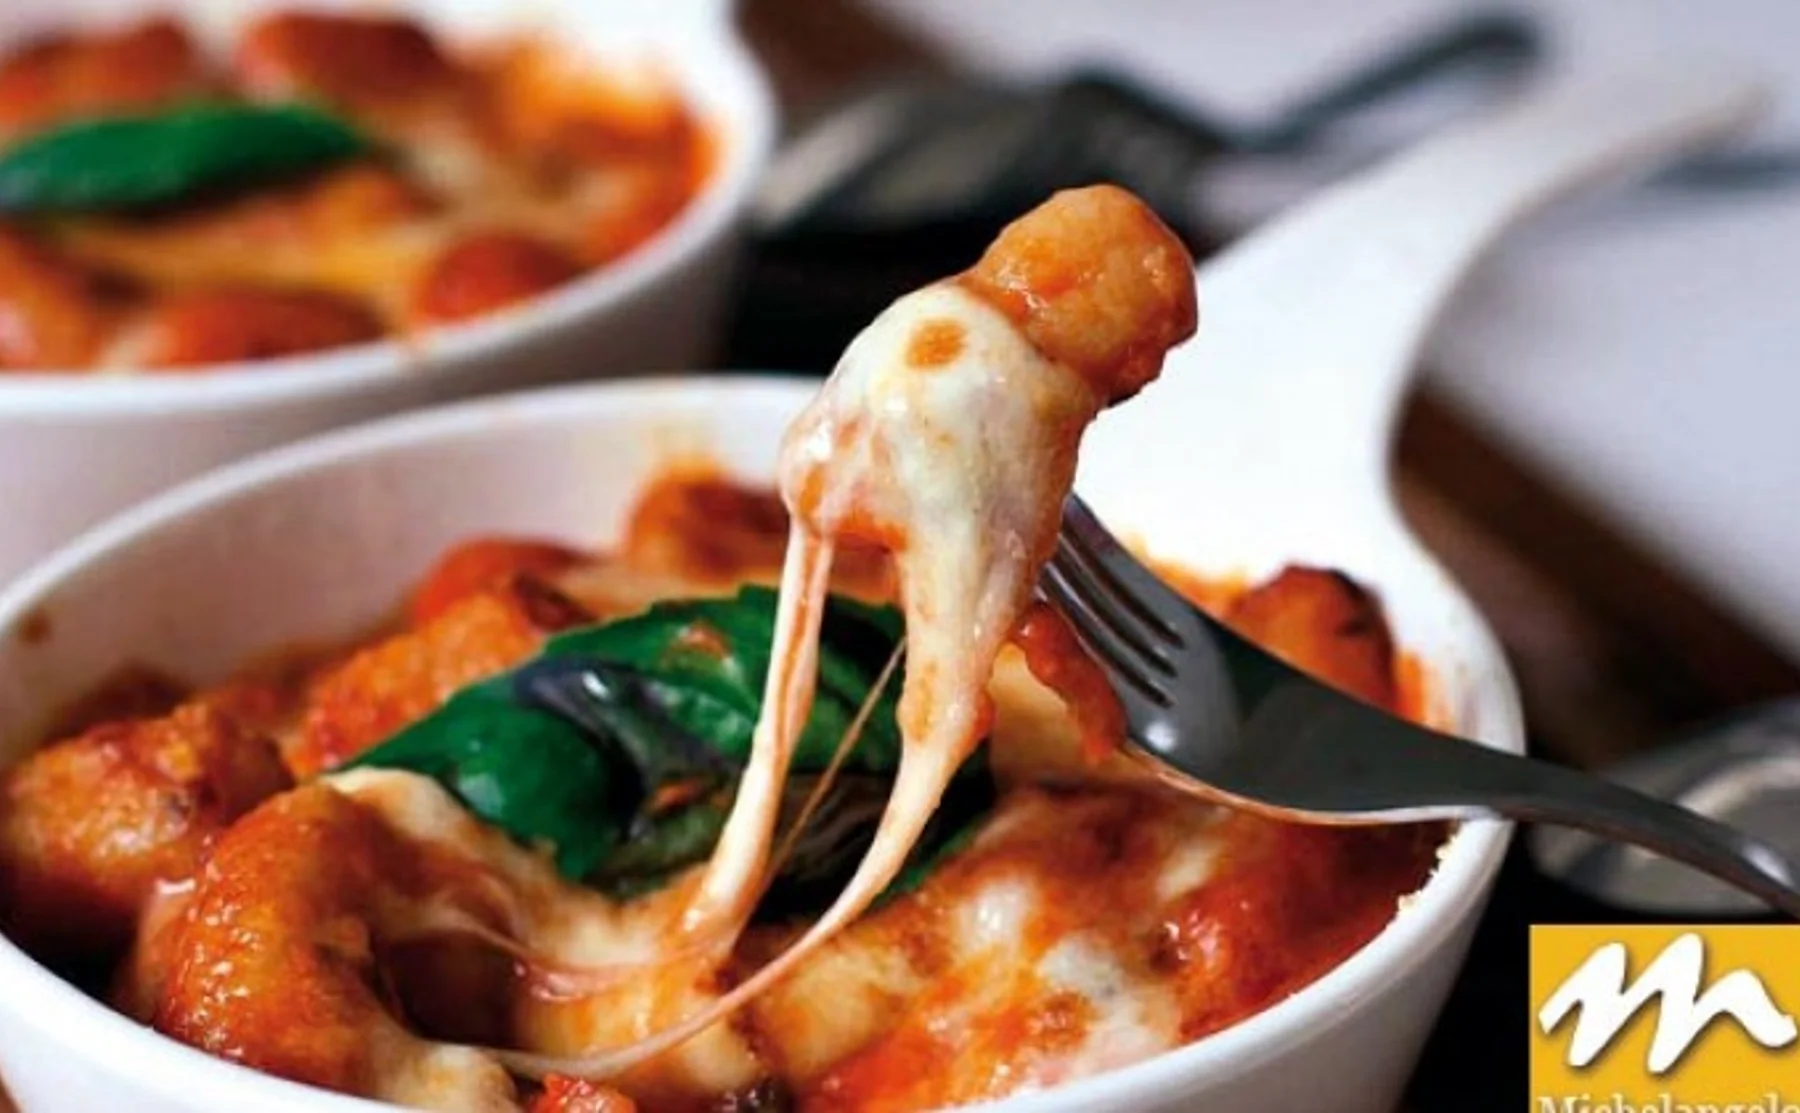 Taste of Italy, an Authentic Italian Food Experience - 486038